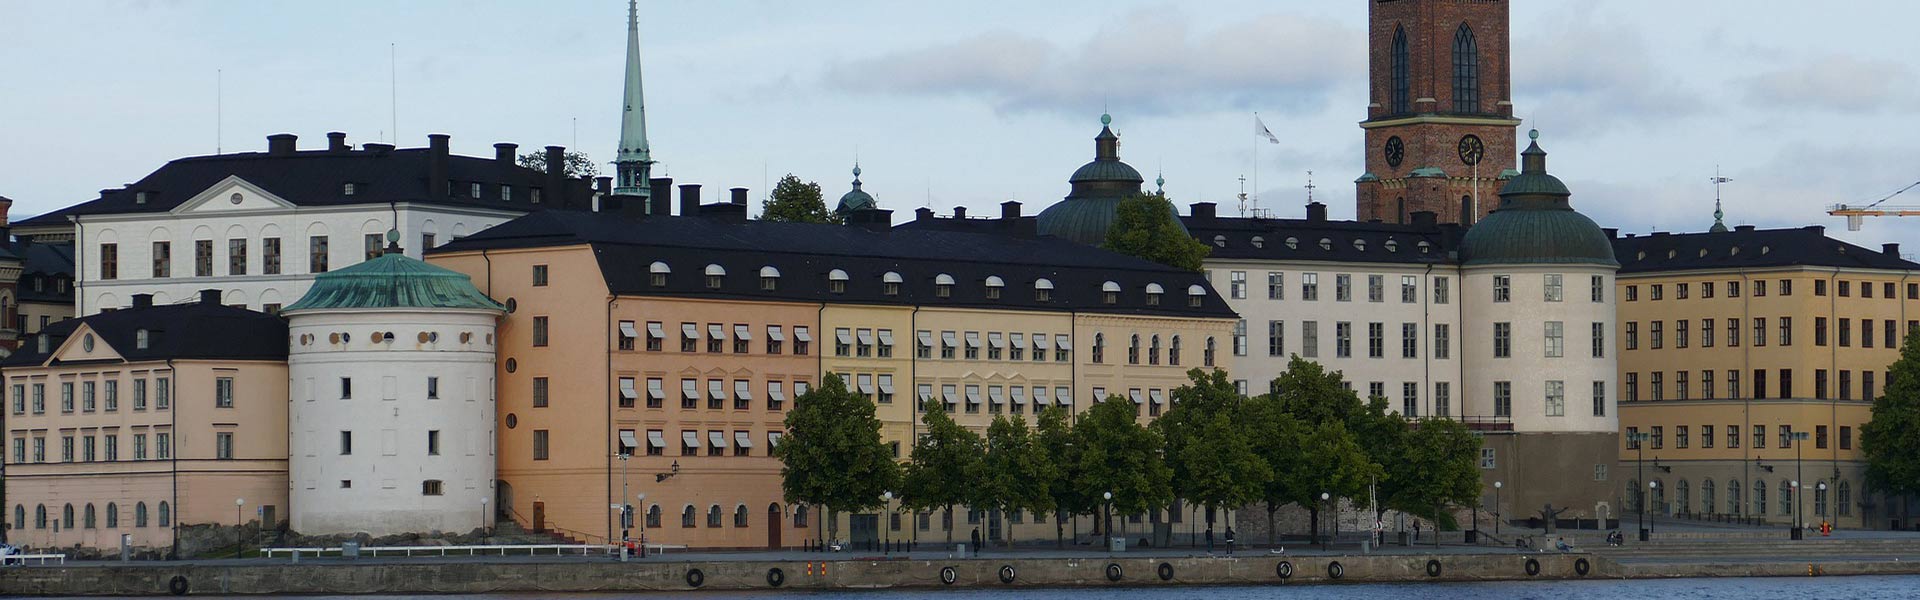 Städfirma Stockholm | Städfirma Sickla